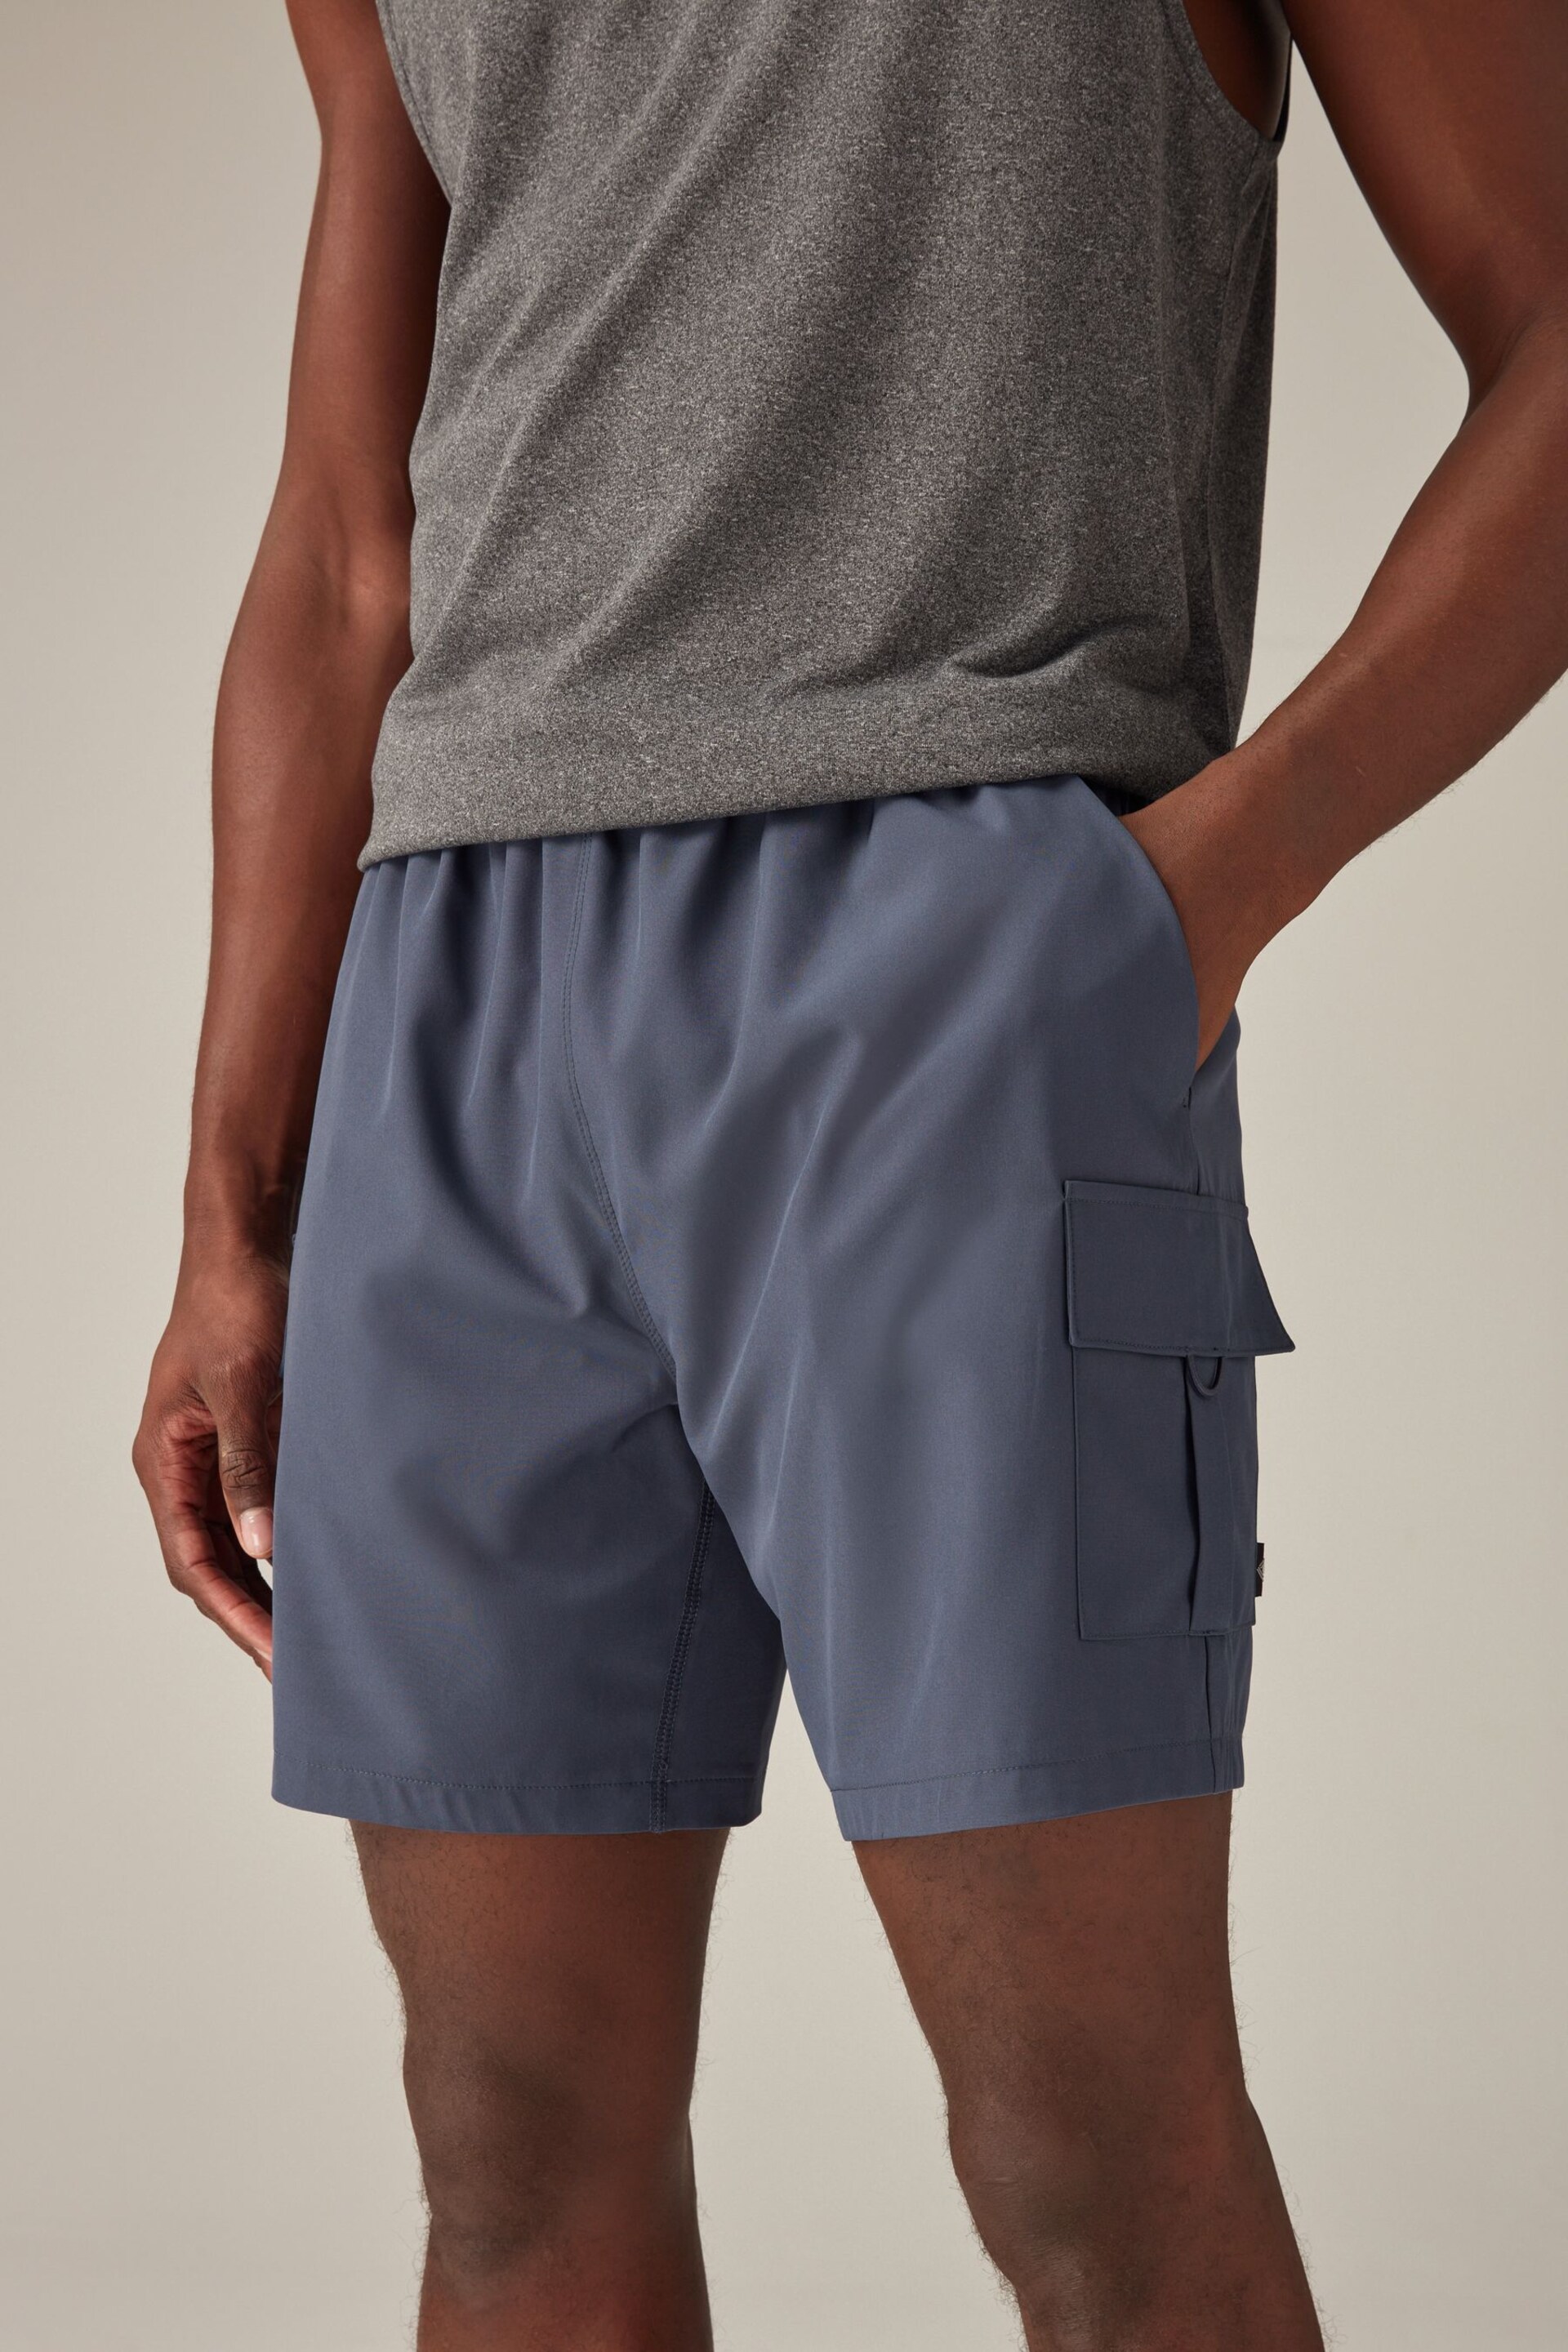 Blue Shorts Active Gym Sports Shorts - Image 5 of 11